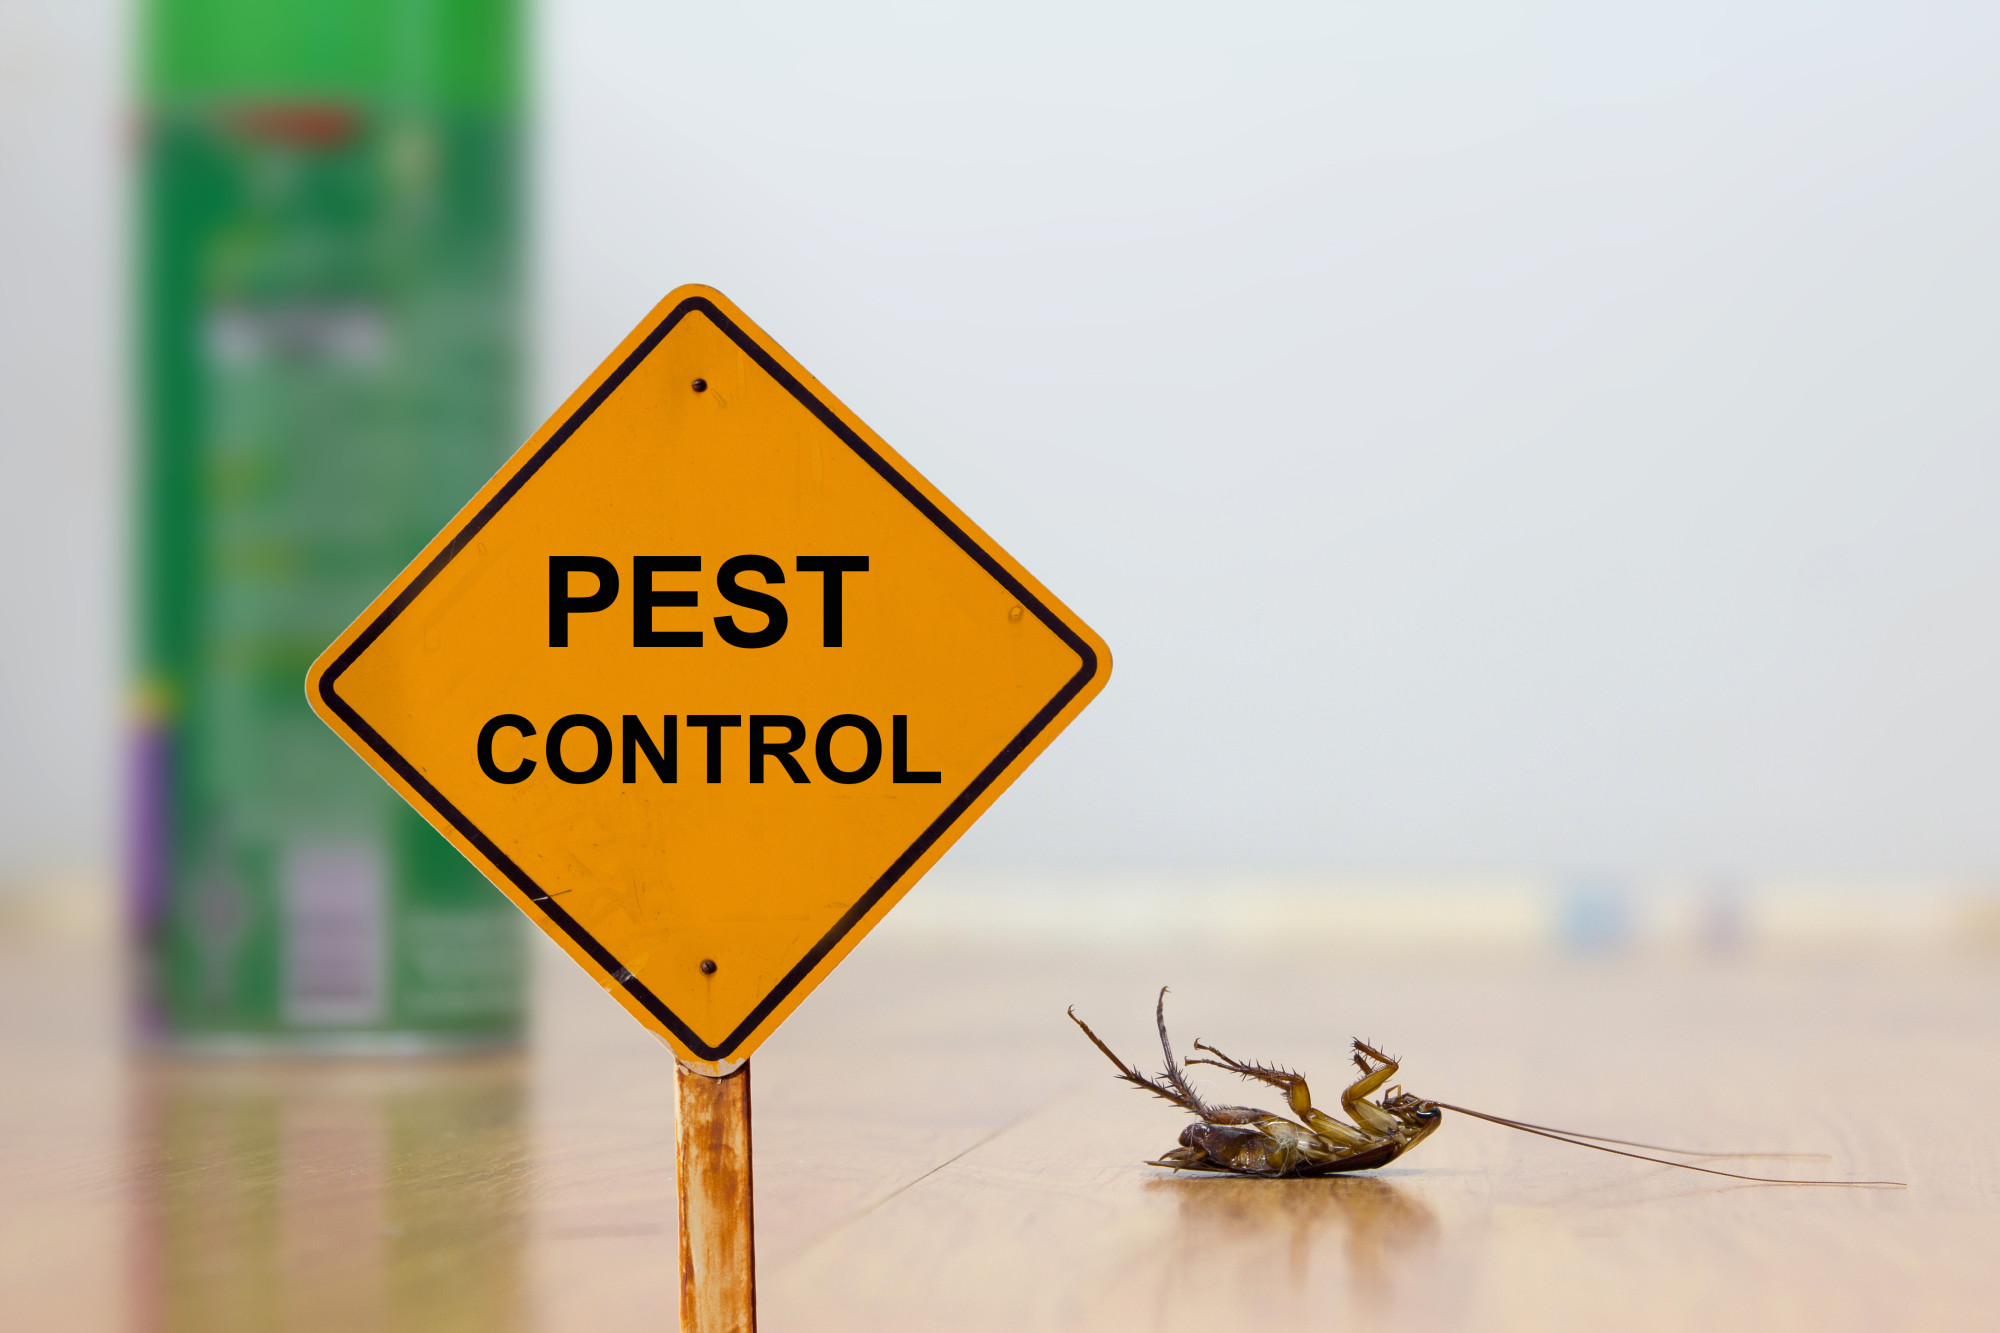 DIY Pest Control: Does it Work?